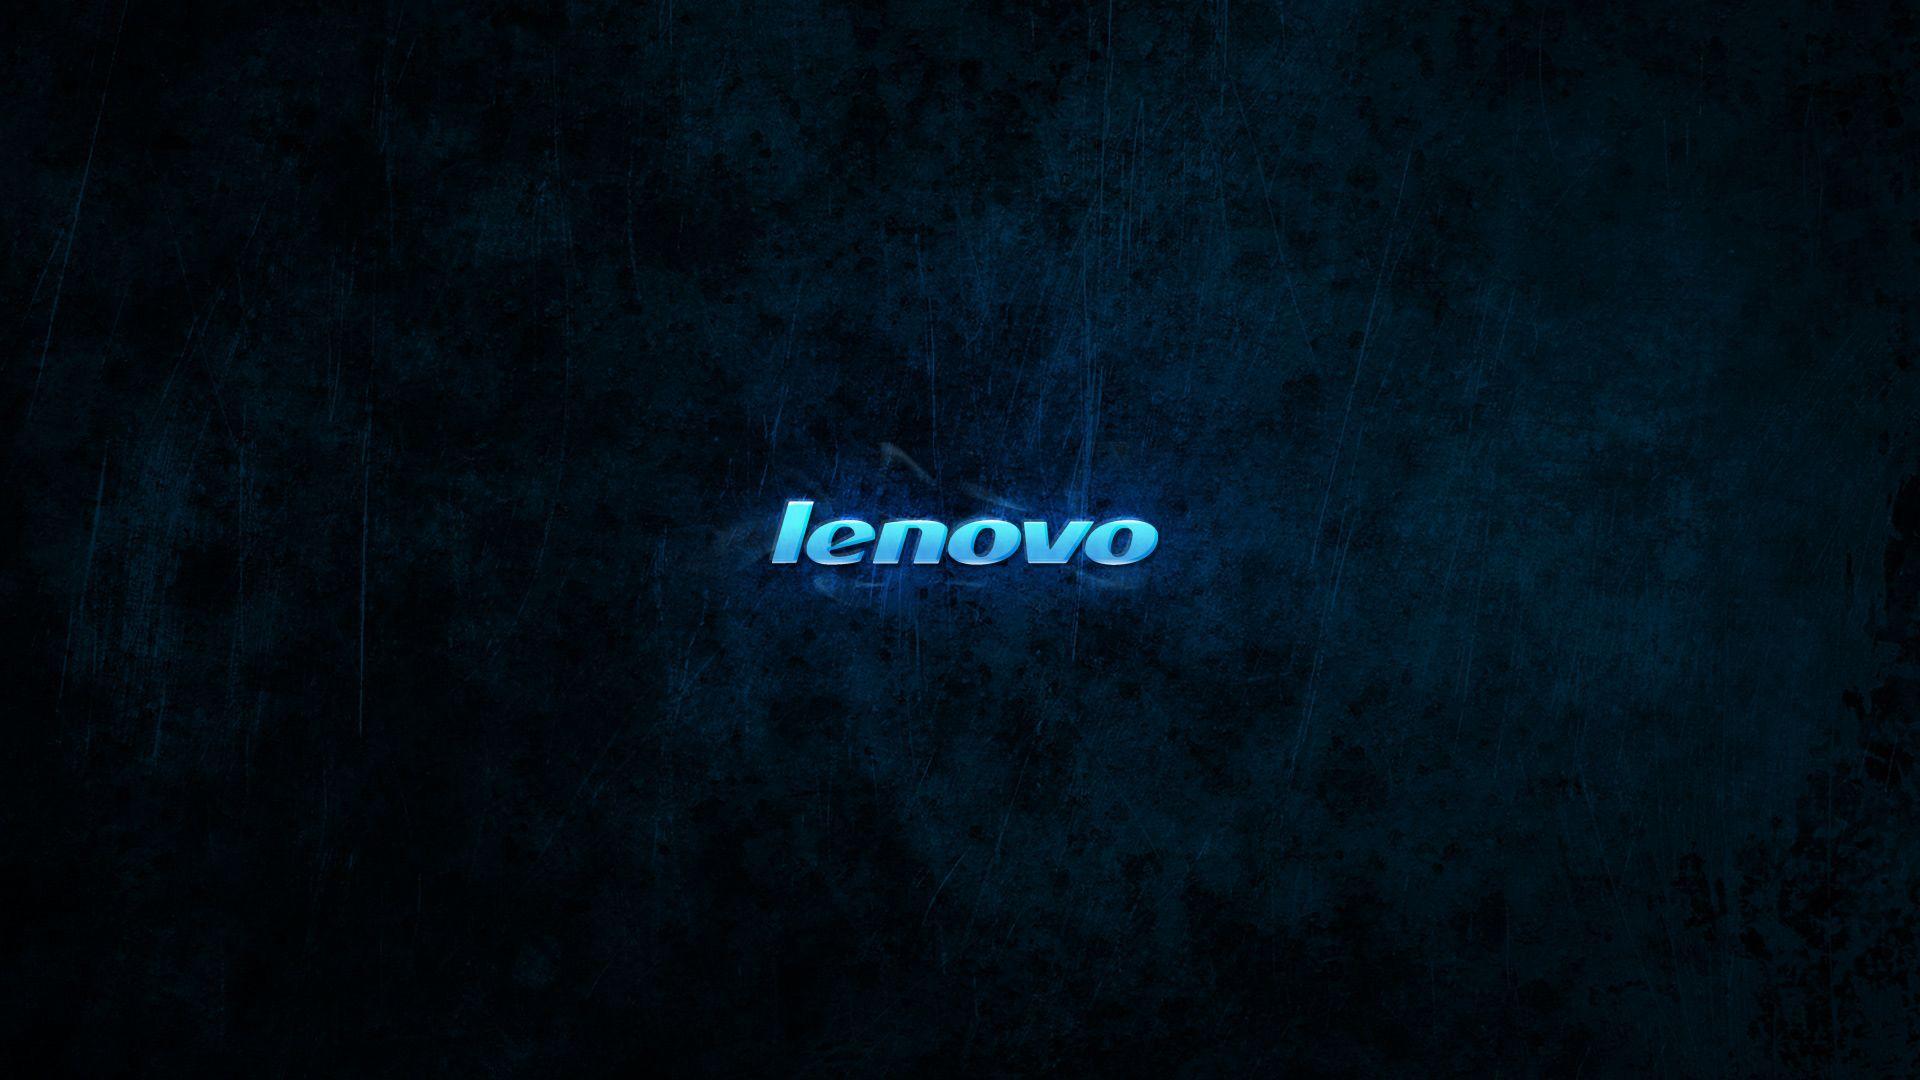 Lenovo Windows 7 Wallpaper